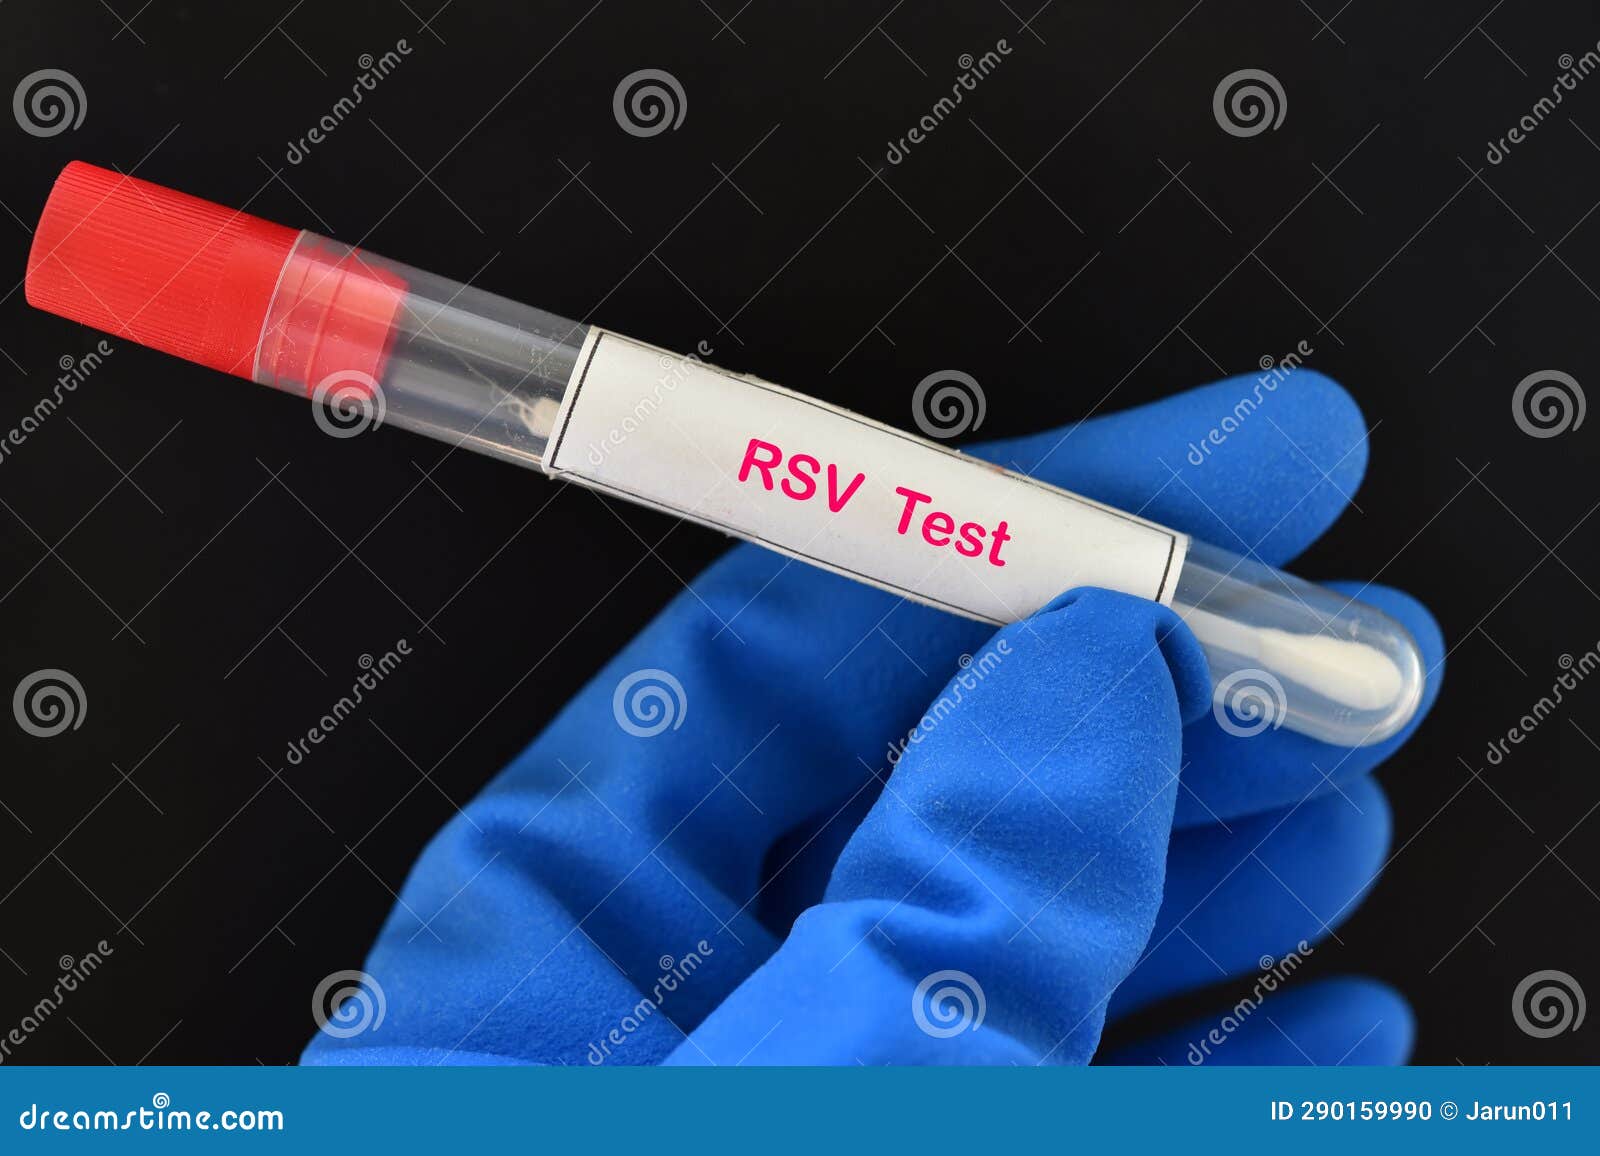 nasopharyngeal swab rsv test